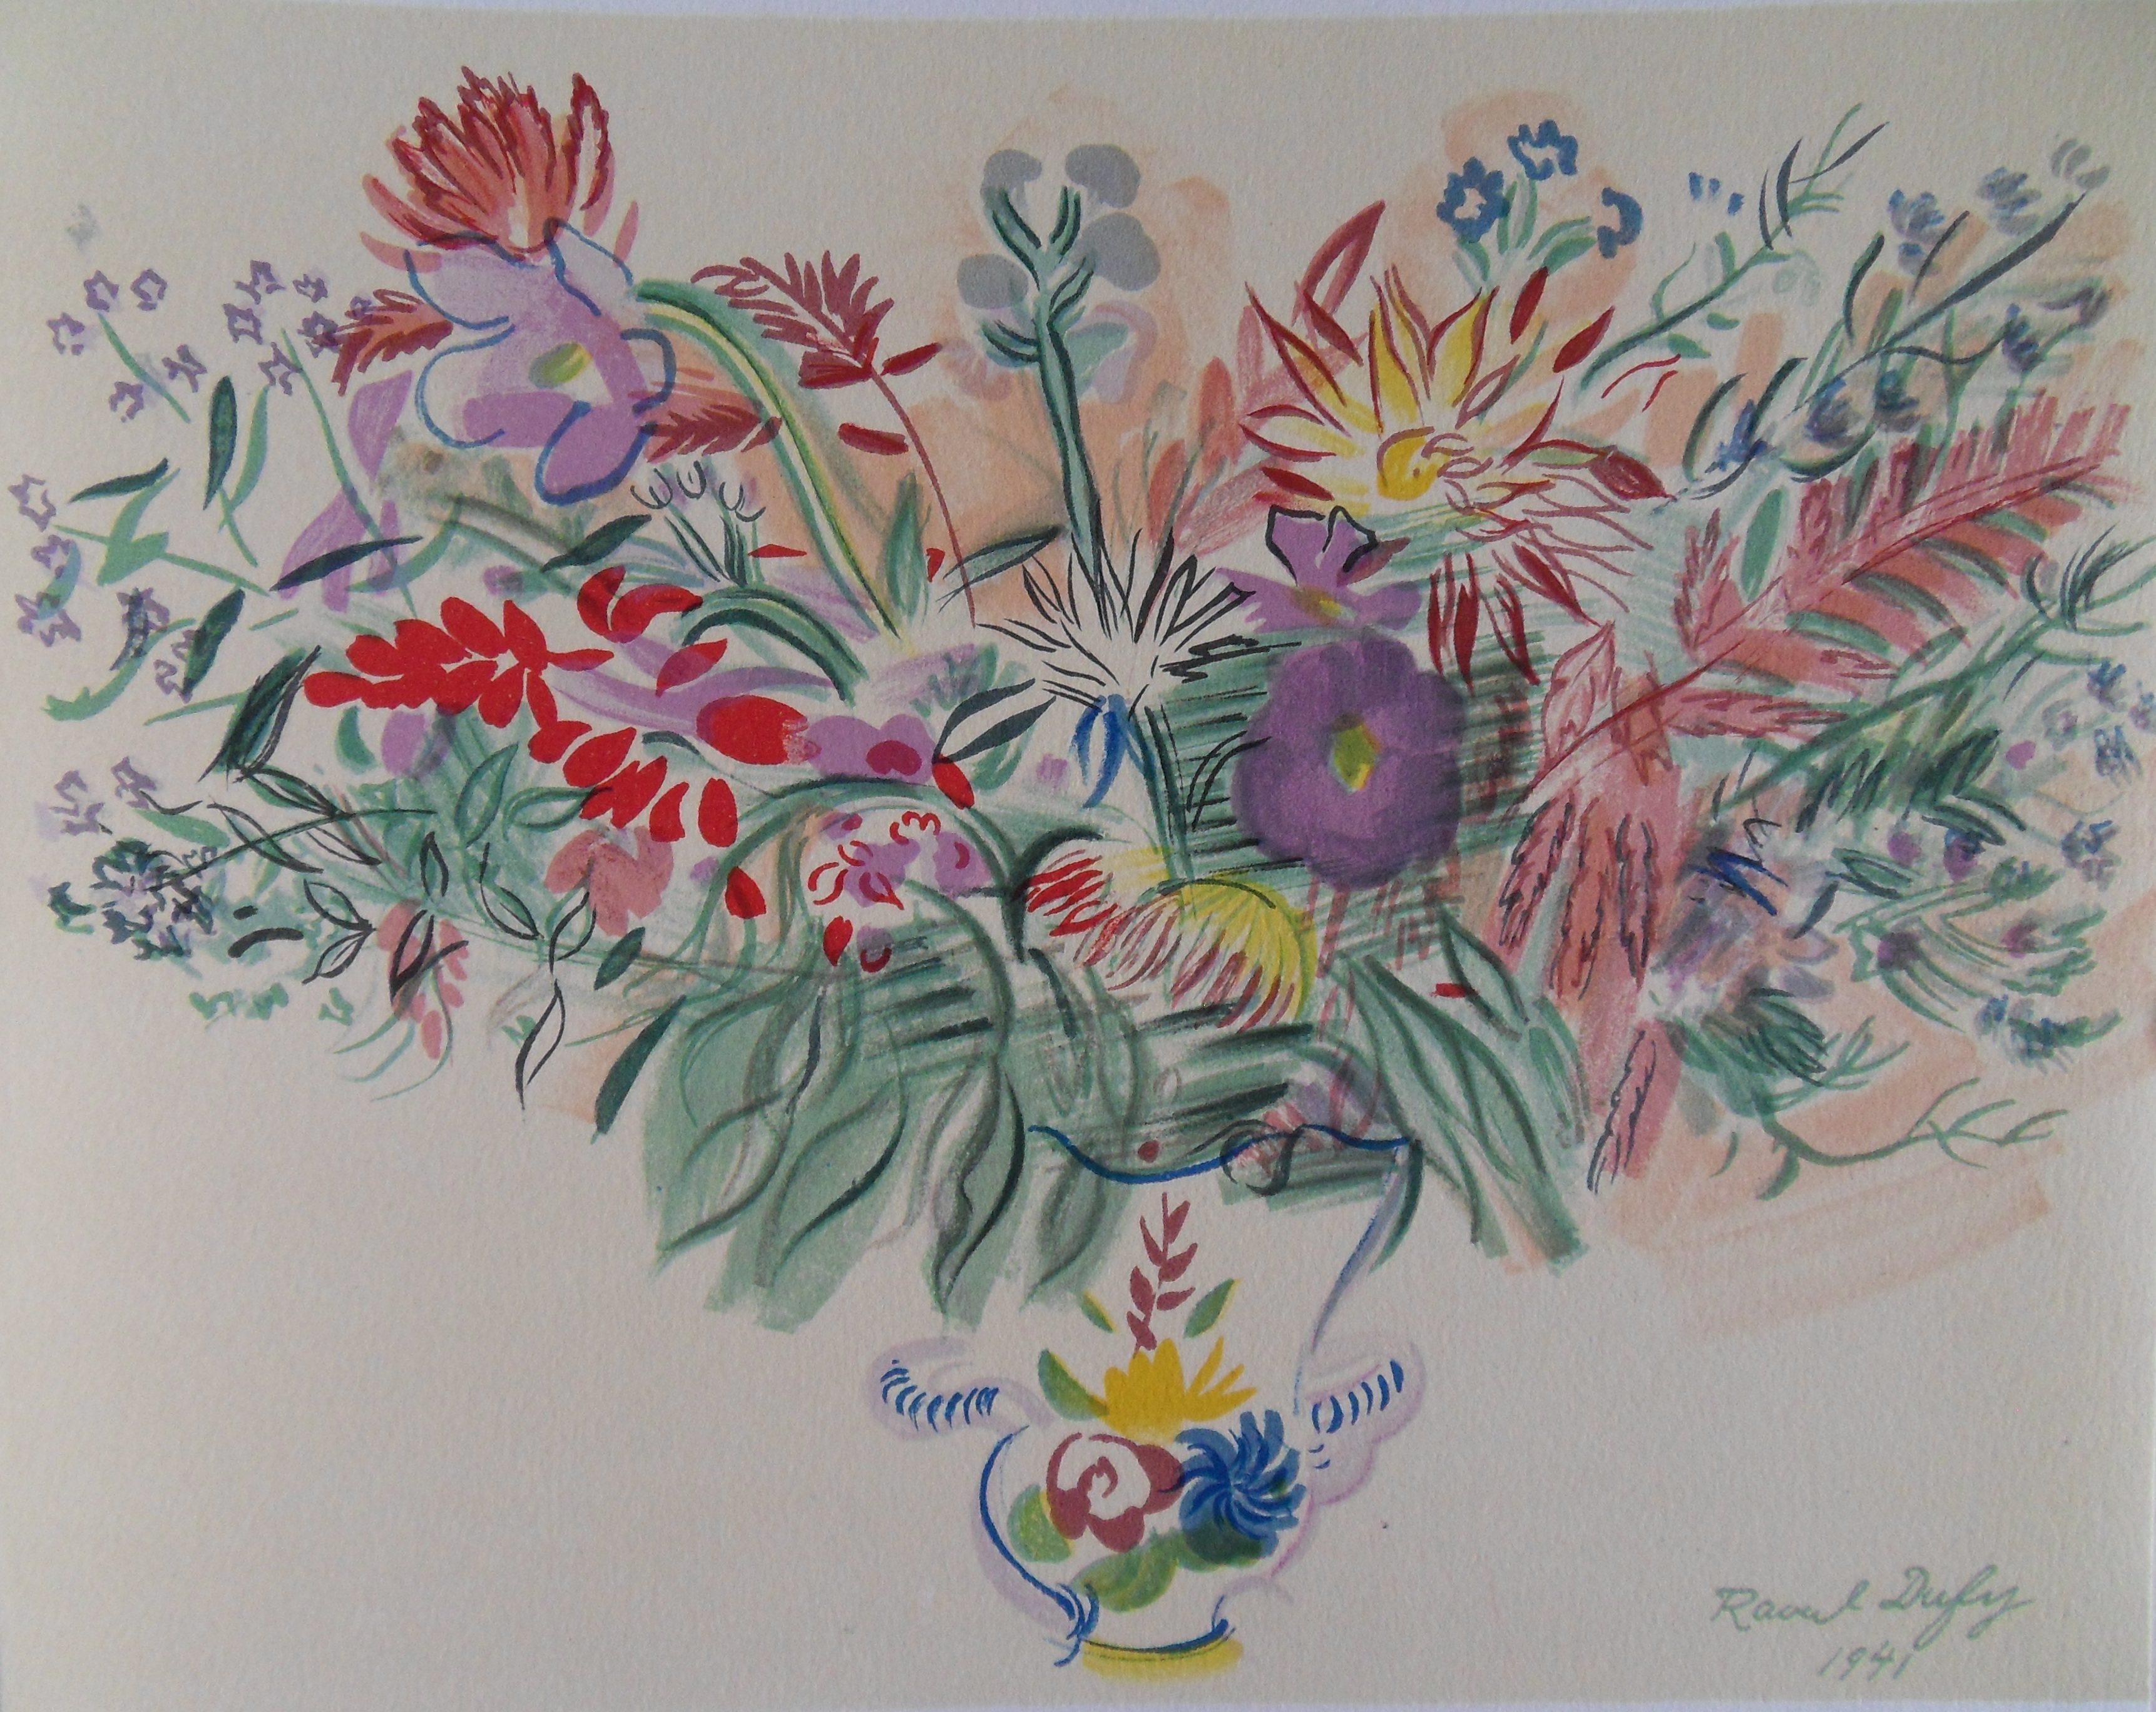 Buntes Blumenstrauß – Original-Lithographie – 1965 – Print von Raoul Dufy